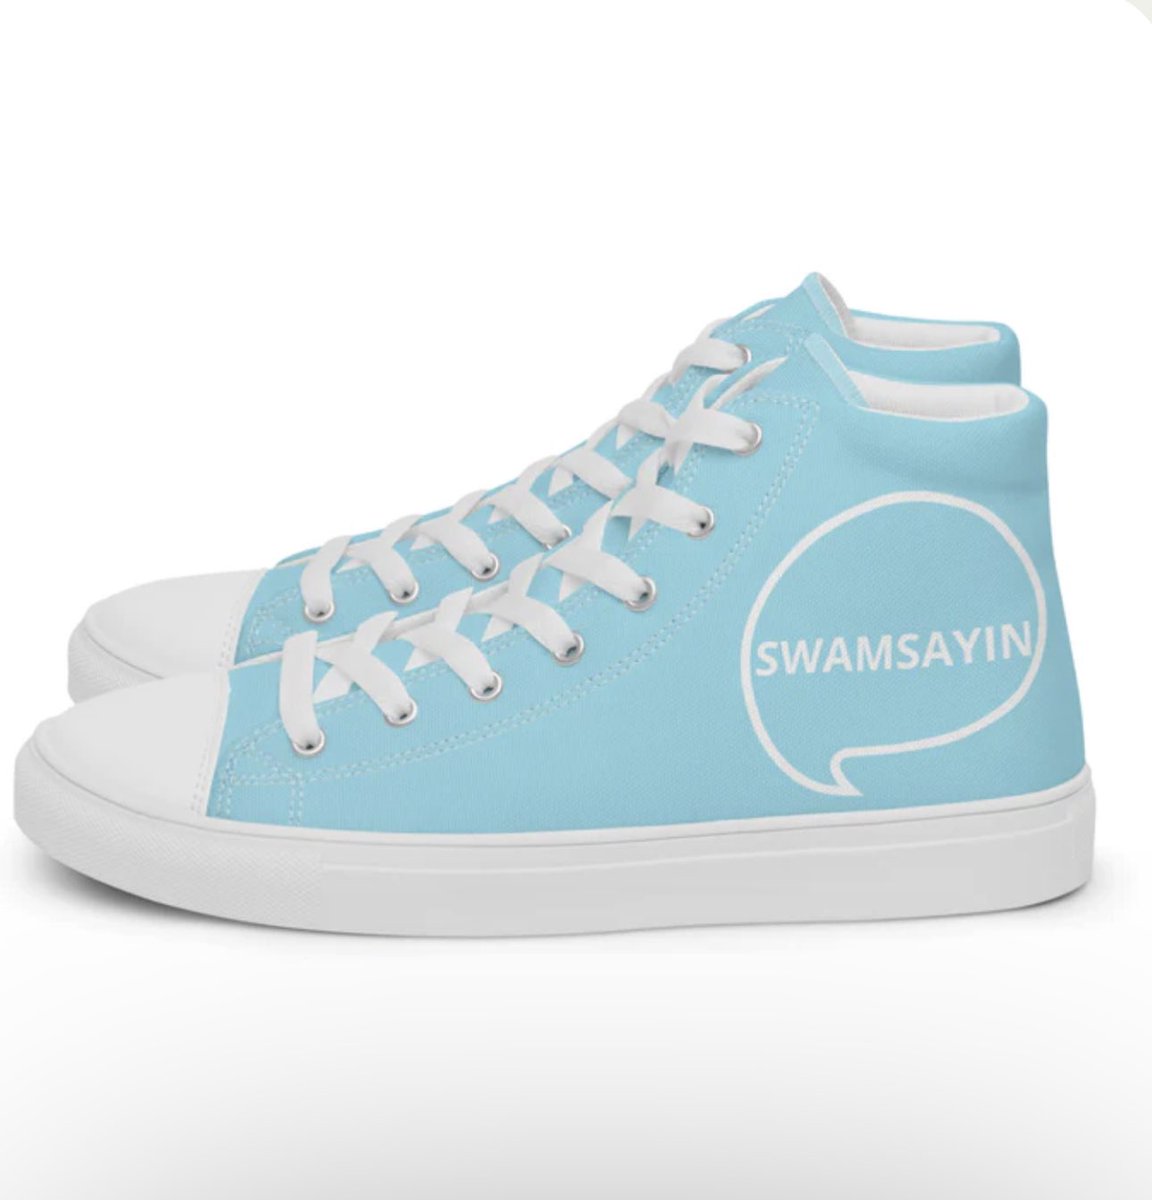 SWAMSAYIN! Swamsayin.myshopify.com 
#hightopsneakers #sneakers